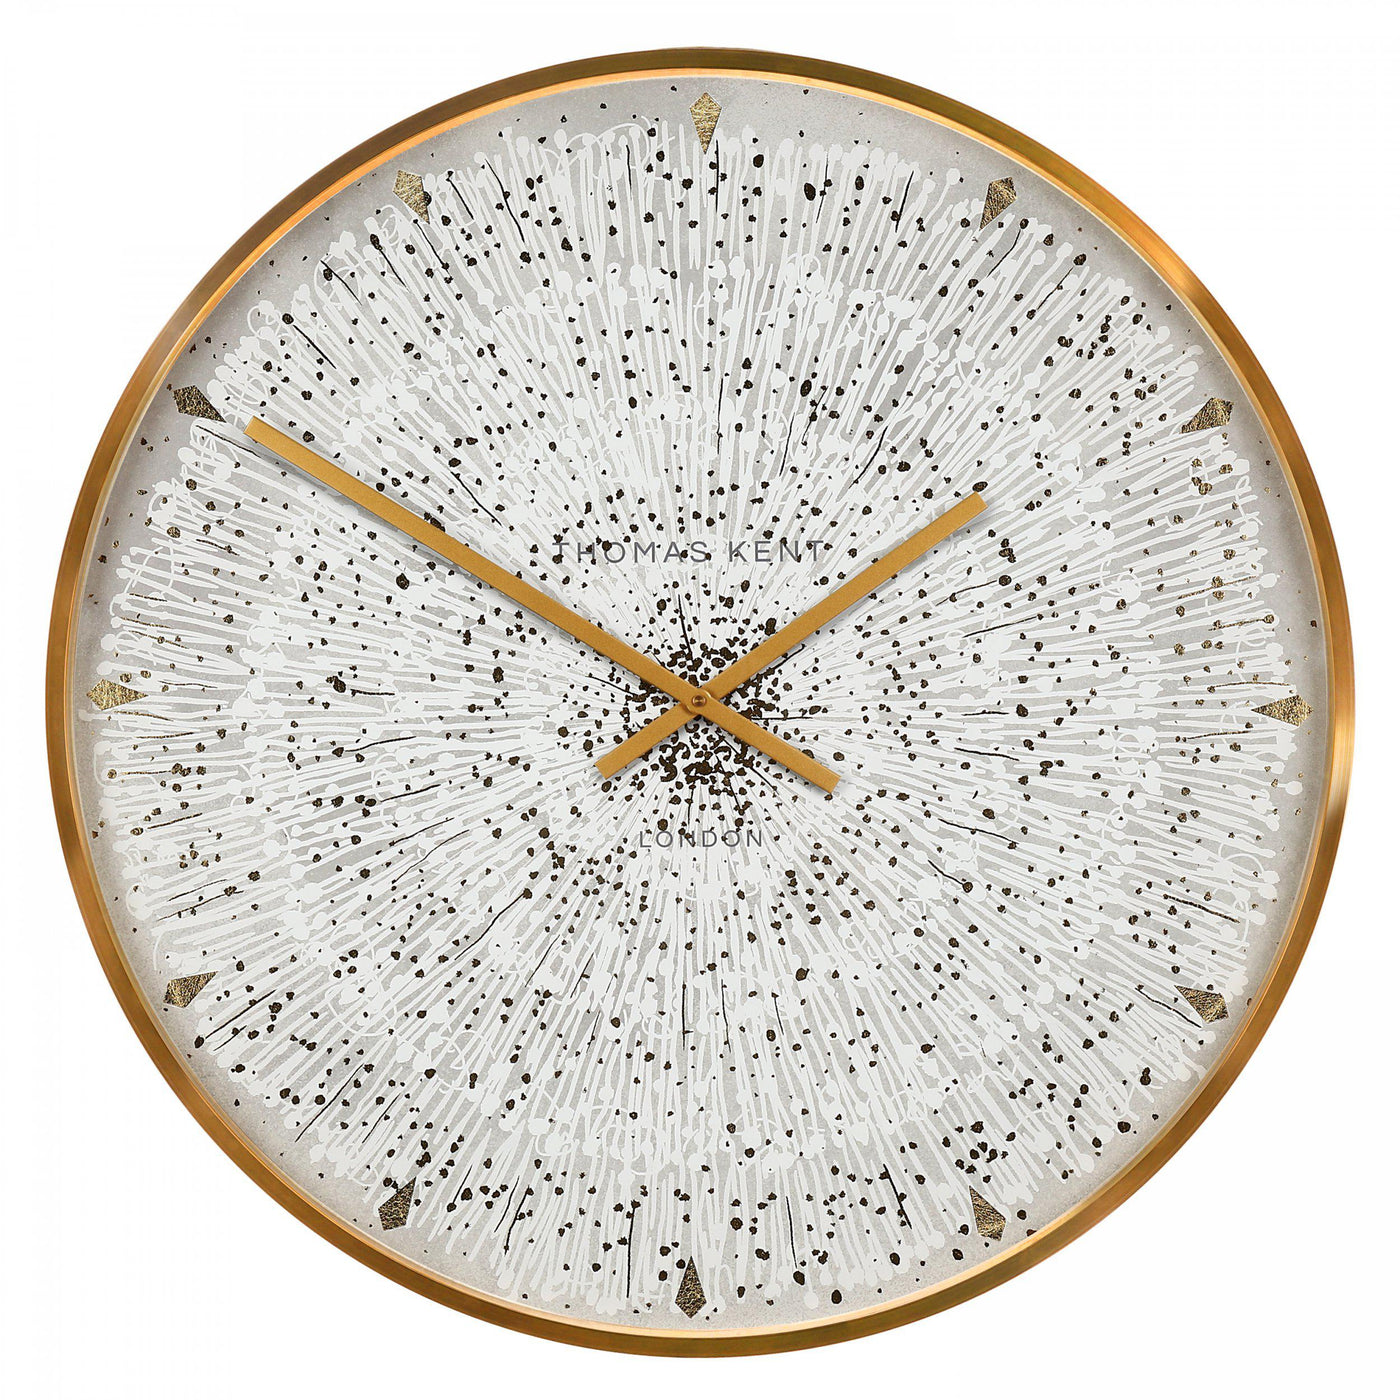 Thomas Kent London. Dandelion Wall Clock (76cm) - timeframedclocks